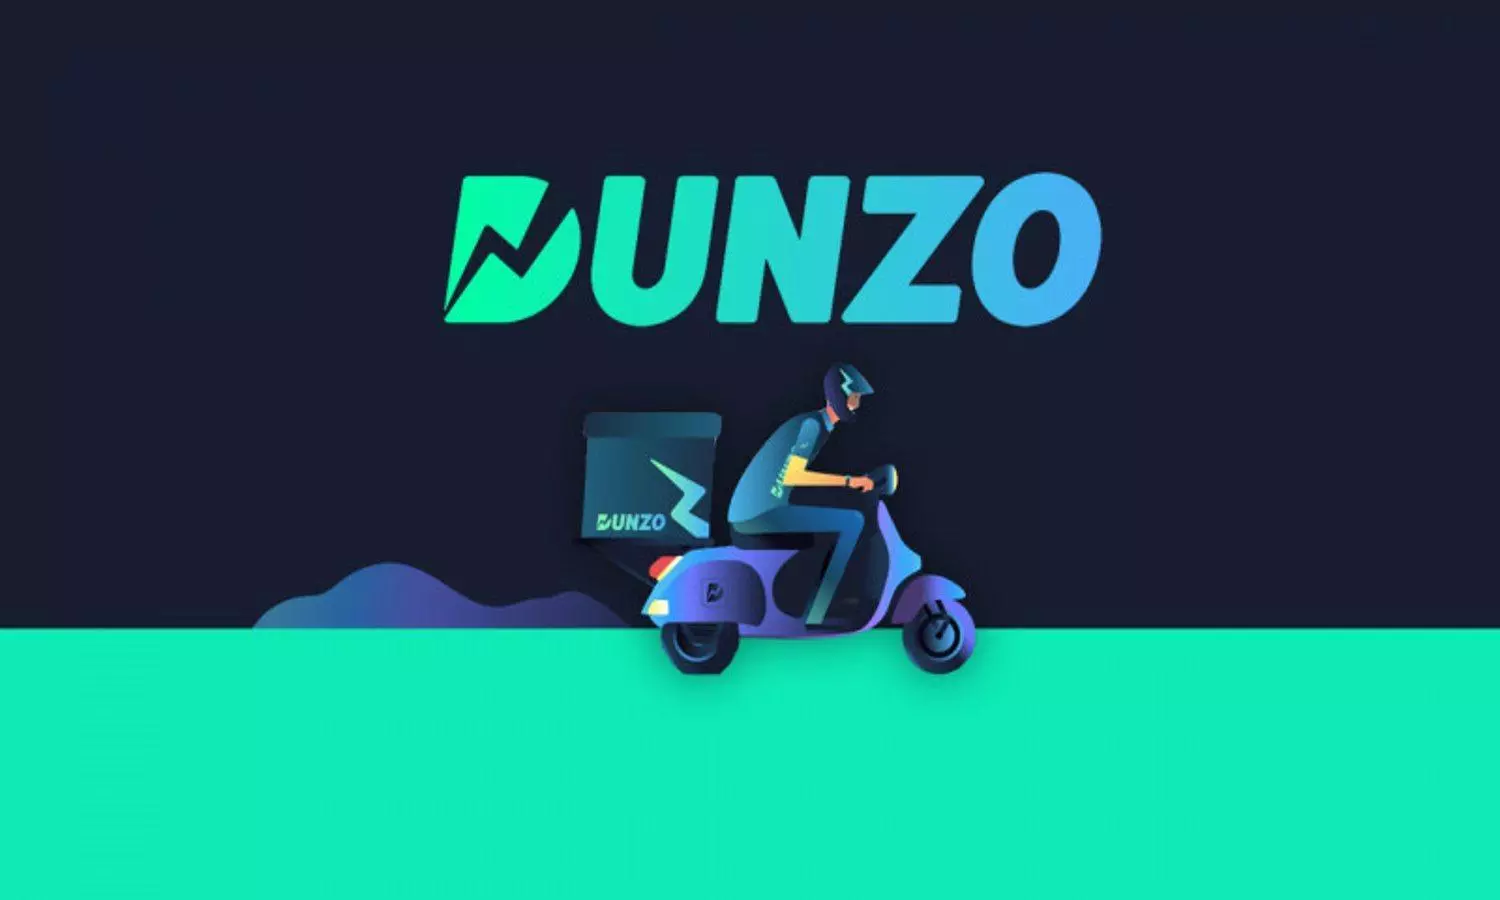 dunzo - Latest News About dunzo - Exchange4media